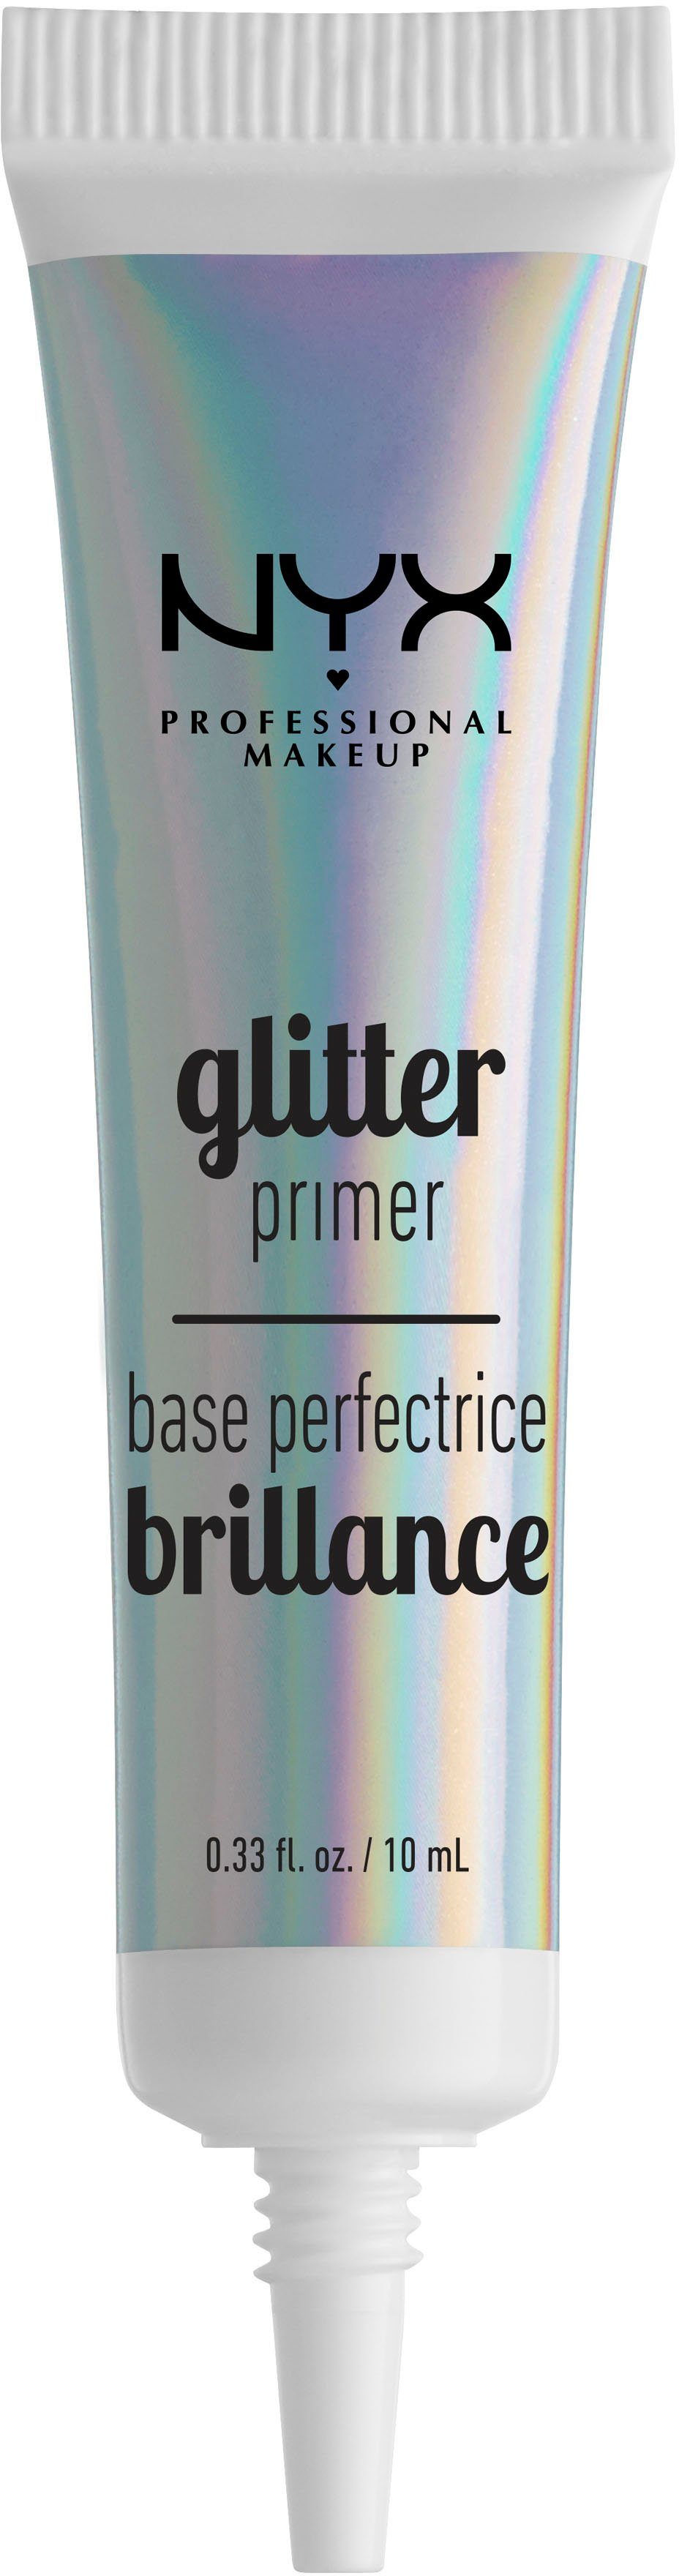 Primer NYX Primer NYX Professional Glitter Makeup